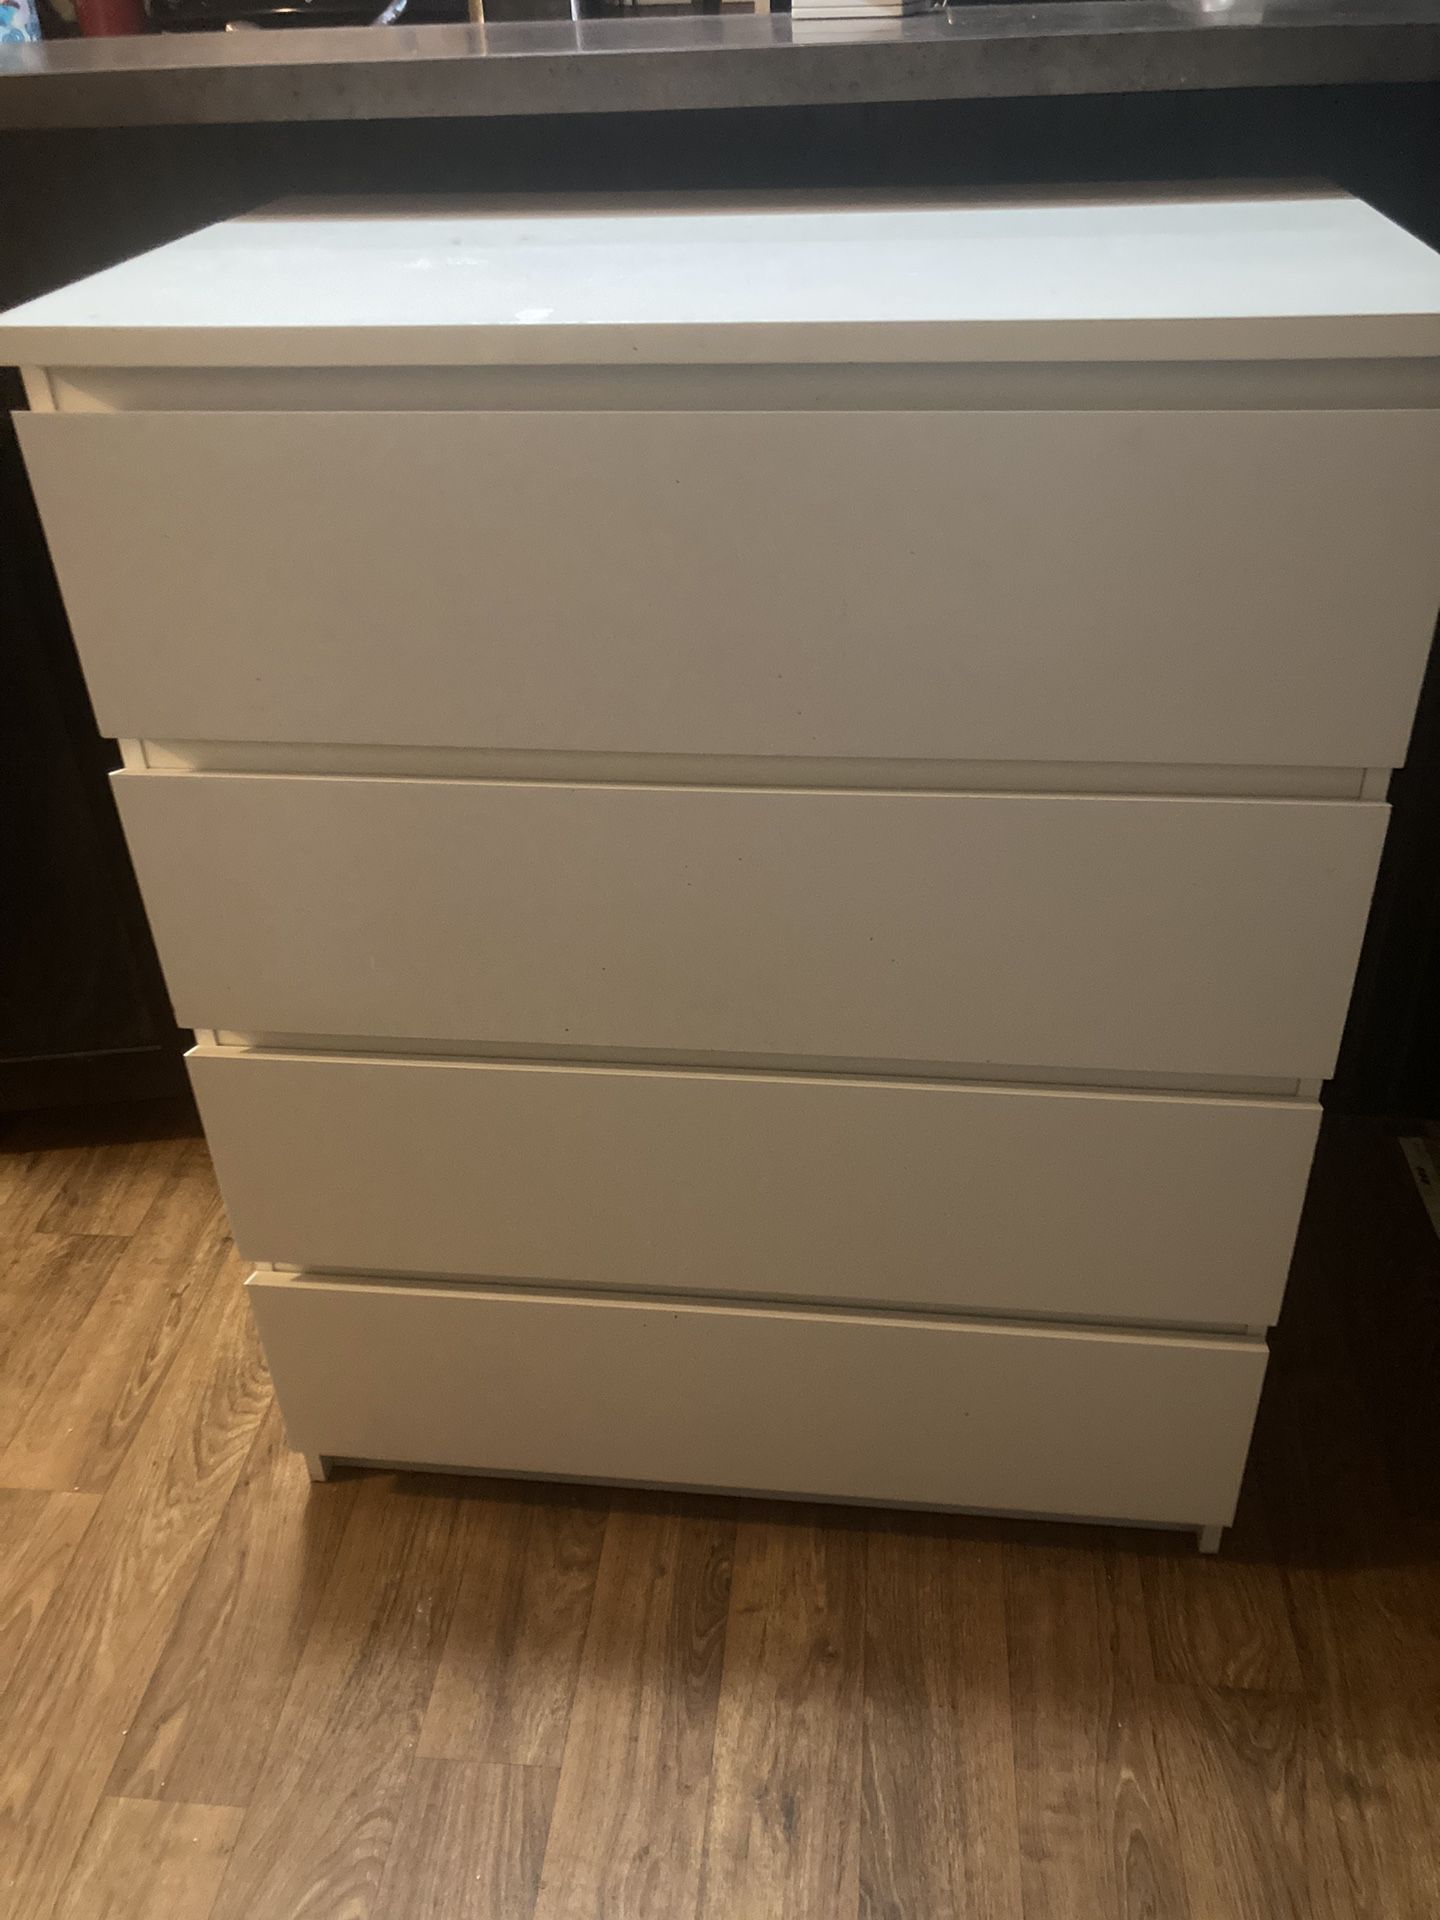 IKEA Dresser White